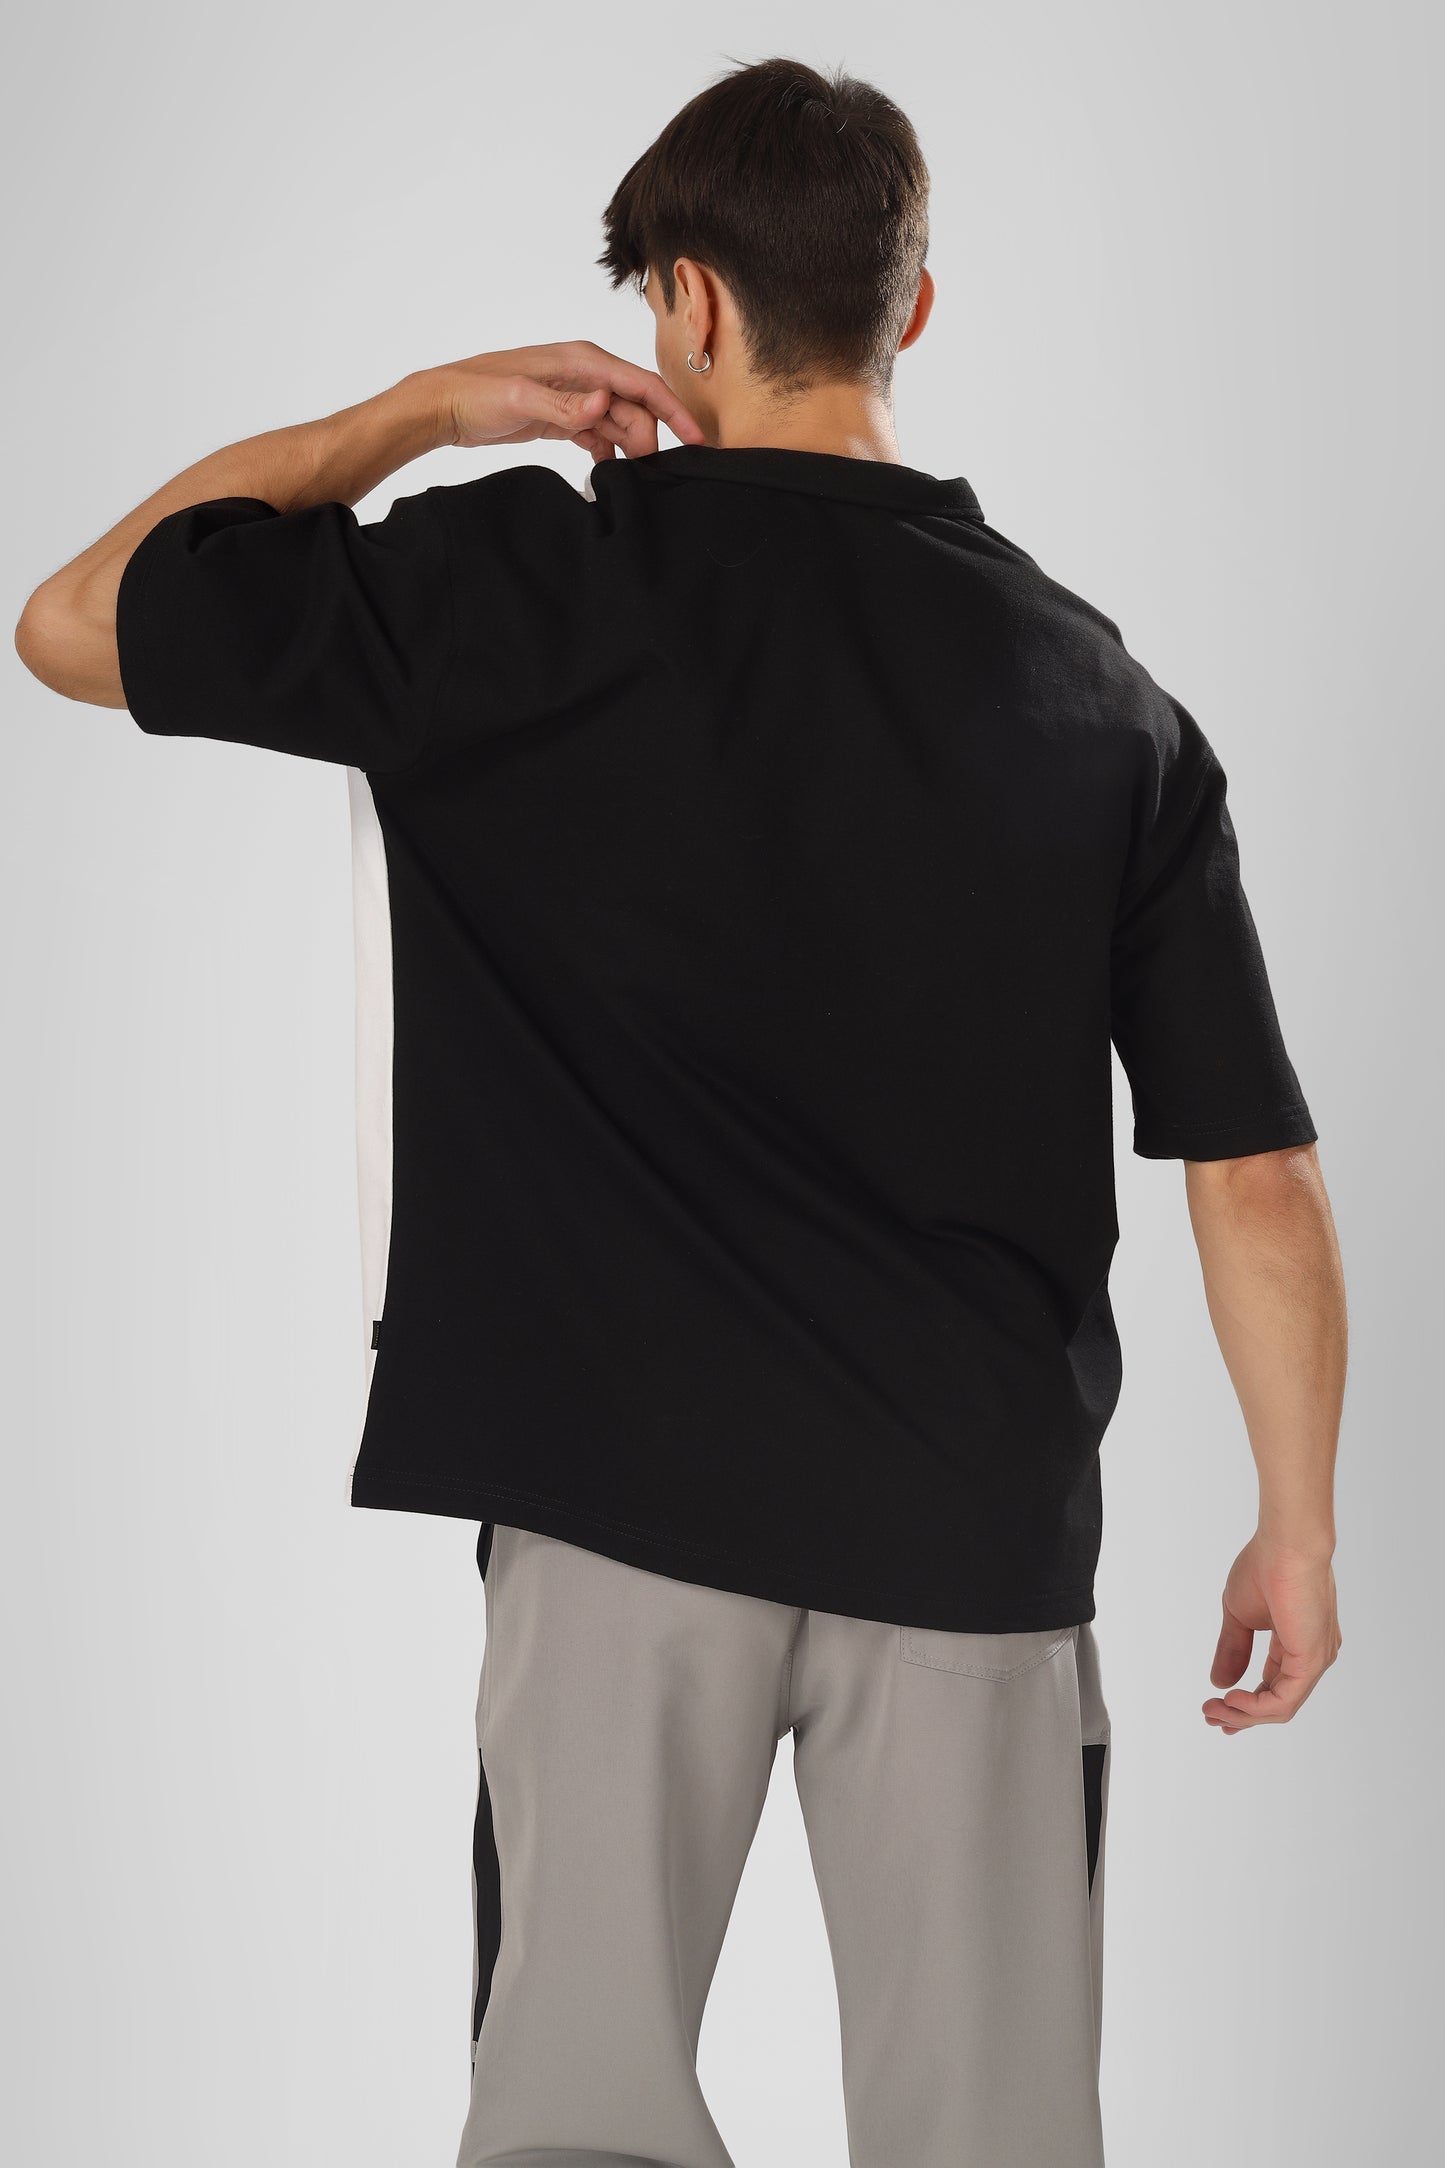 Cheugy Oversized Polo T-Shirt (Black-White)